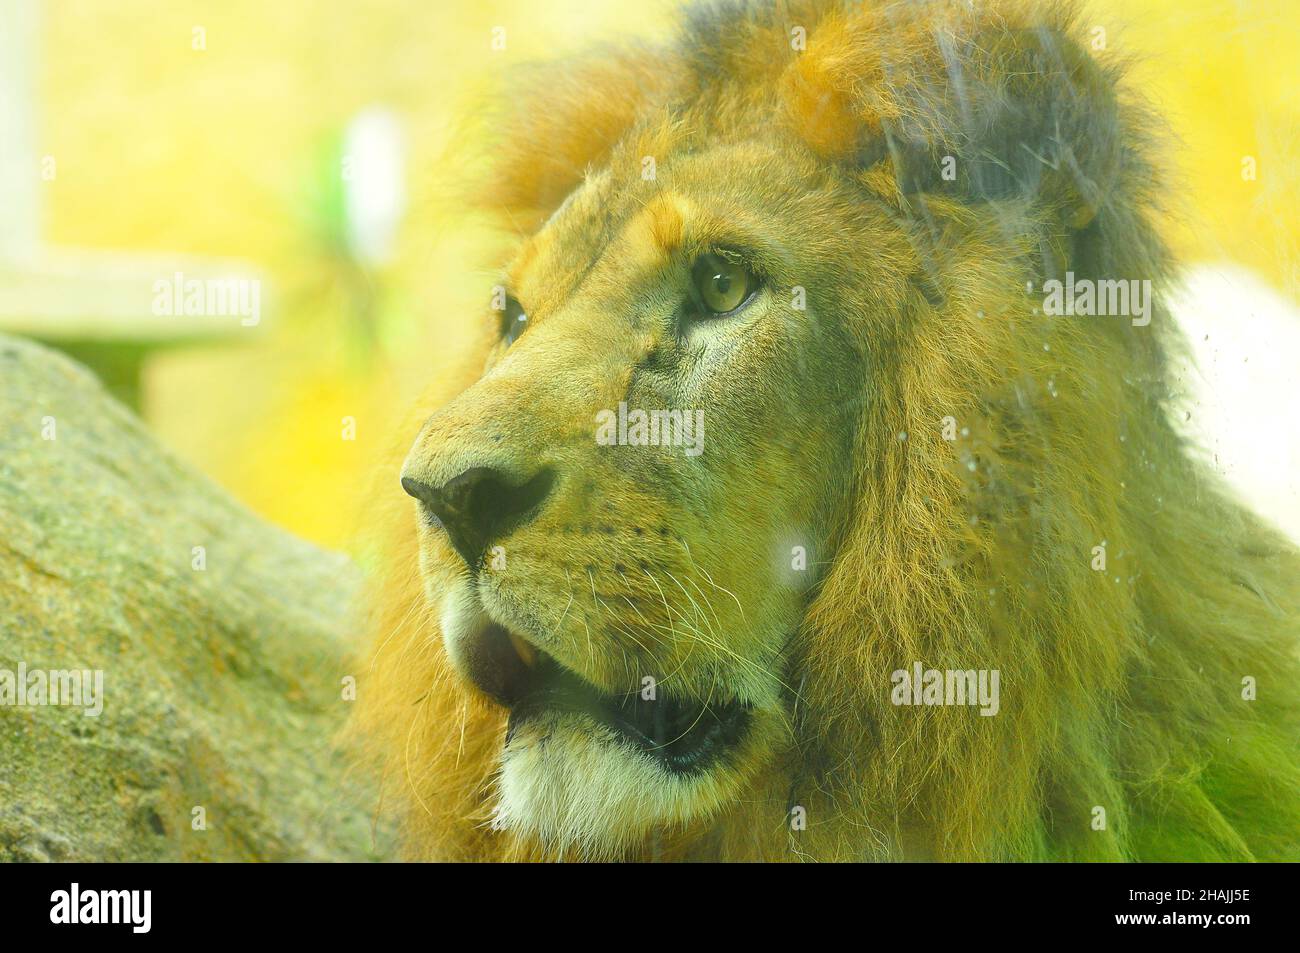 Lion close up, lion eyes Stock Photo